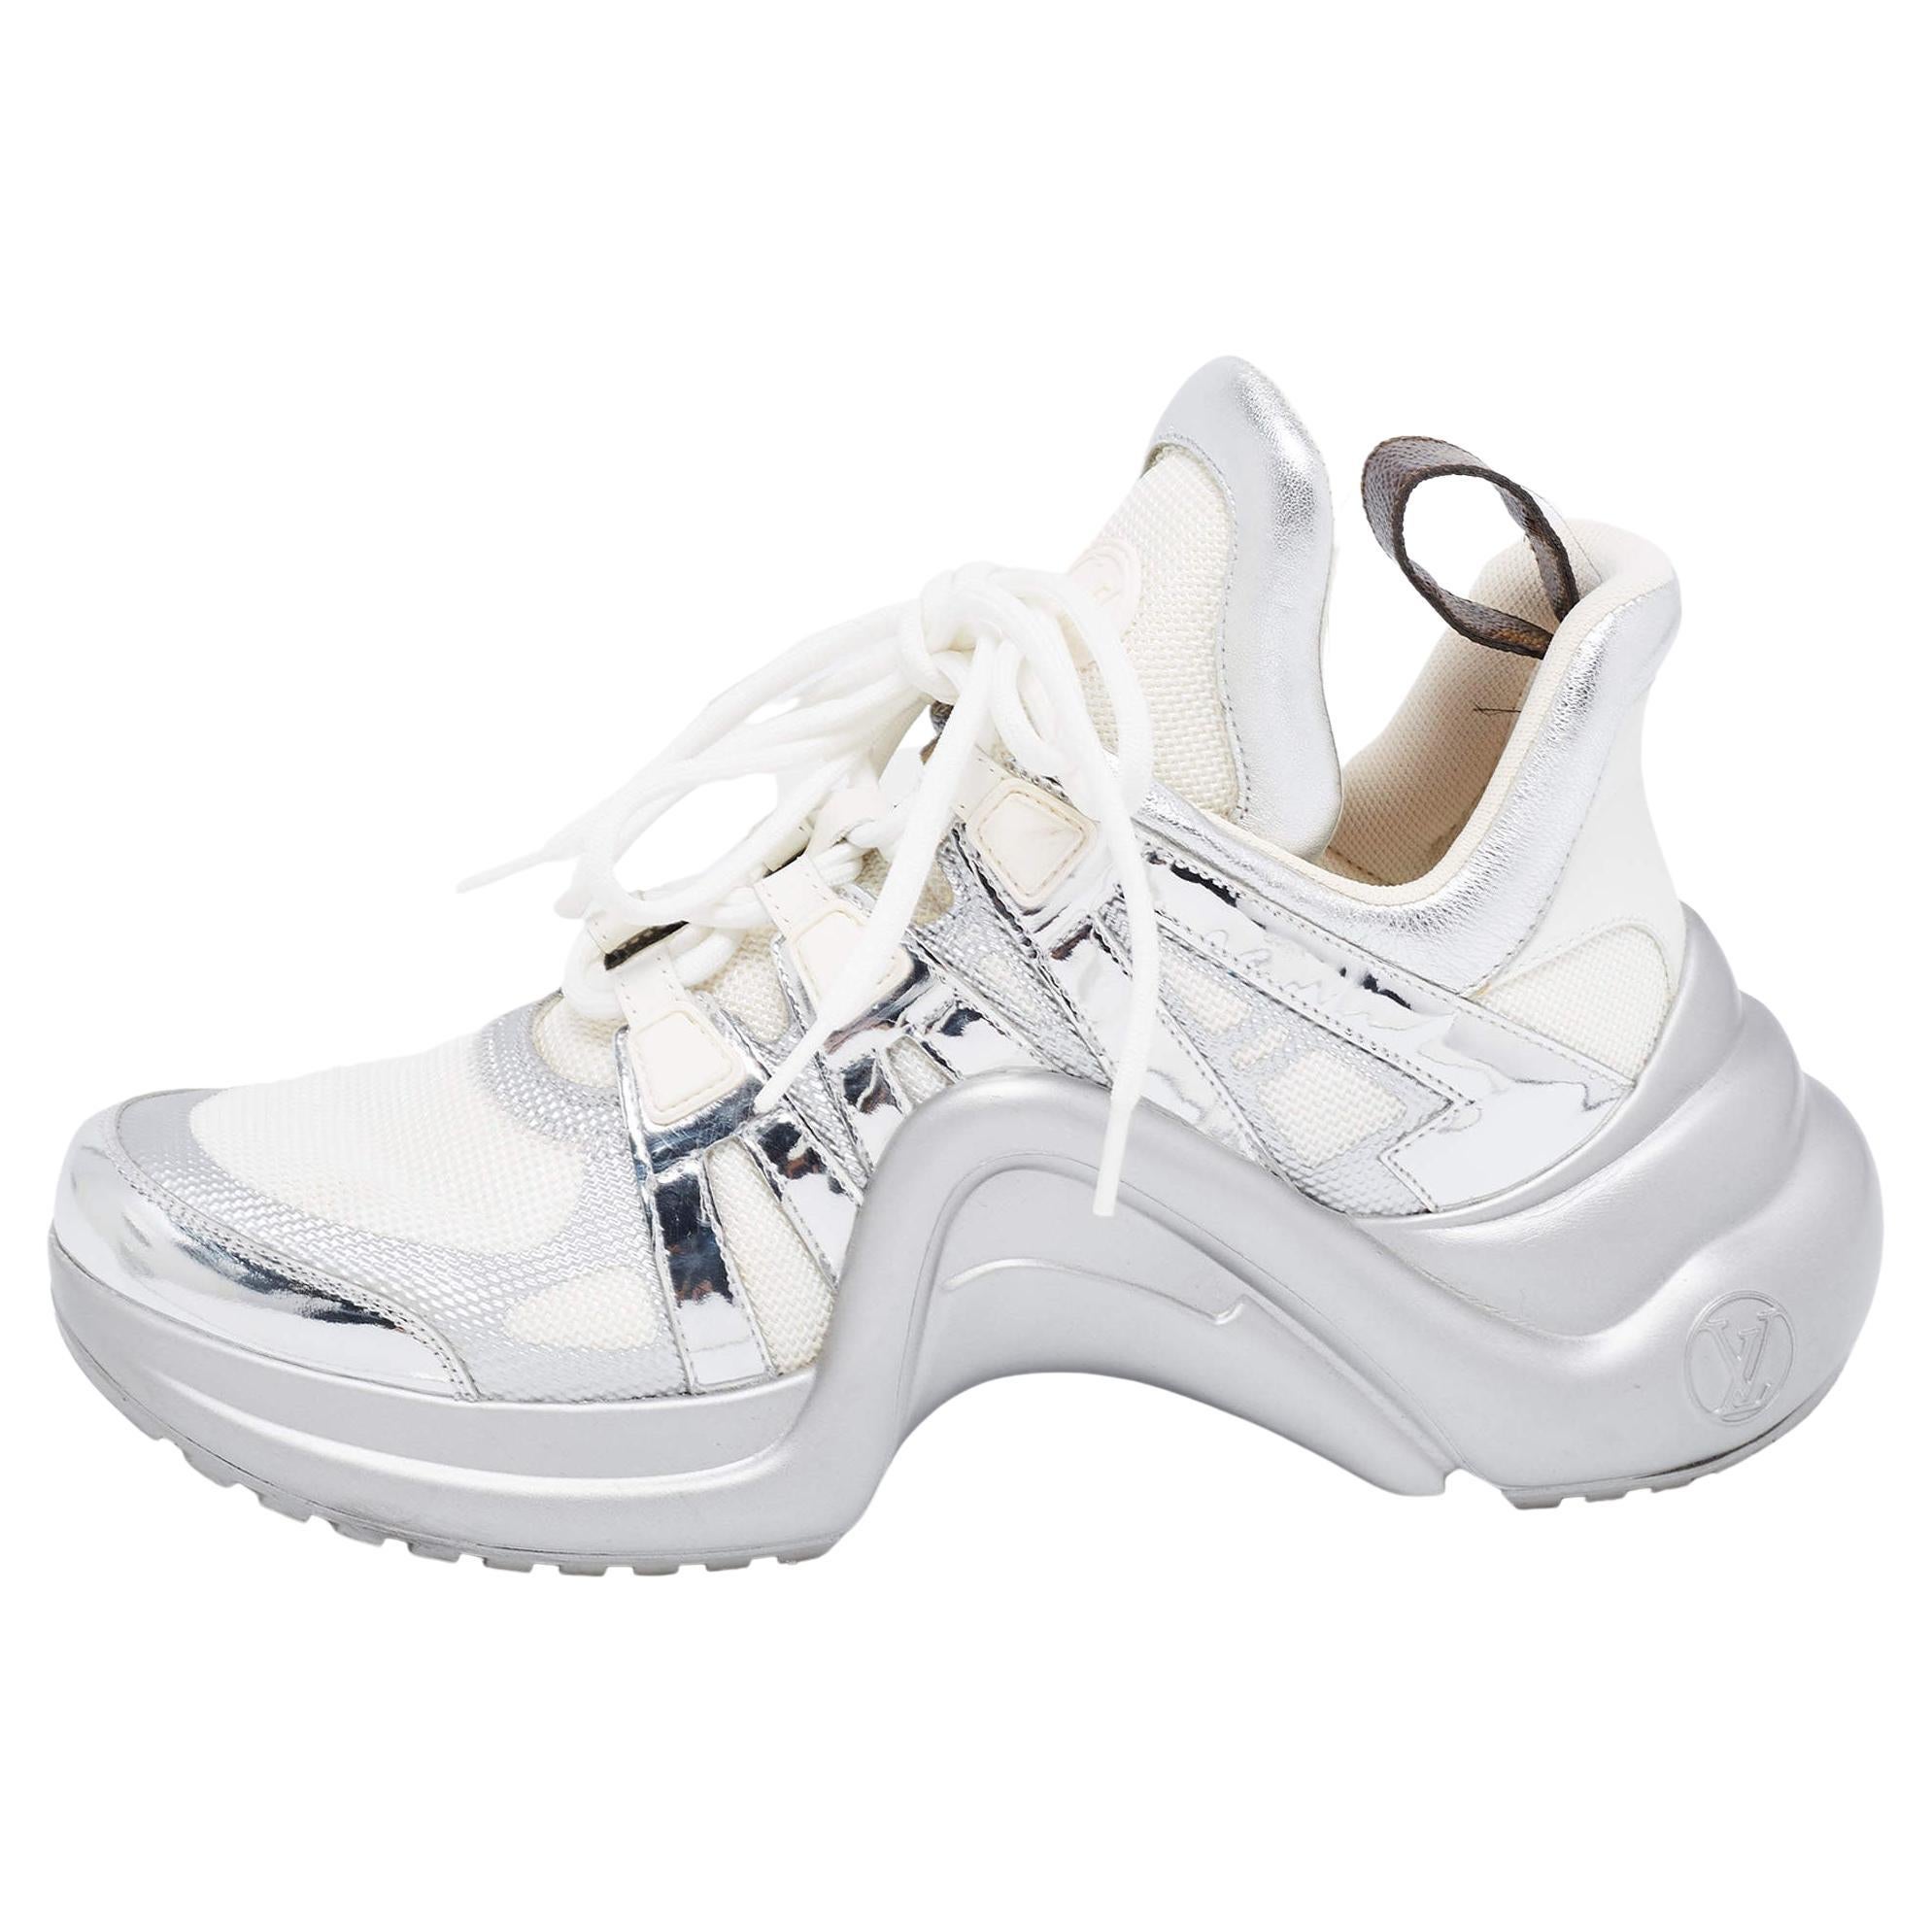 Louis Vuitton Archlight Chunky Sneaker | (Est. Retail